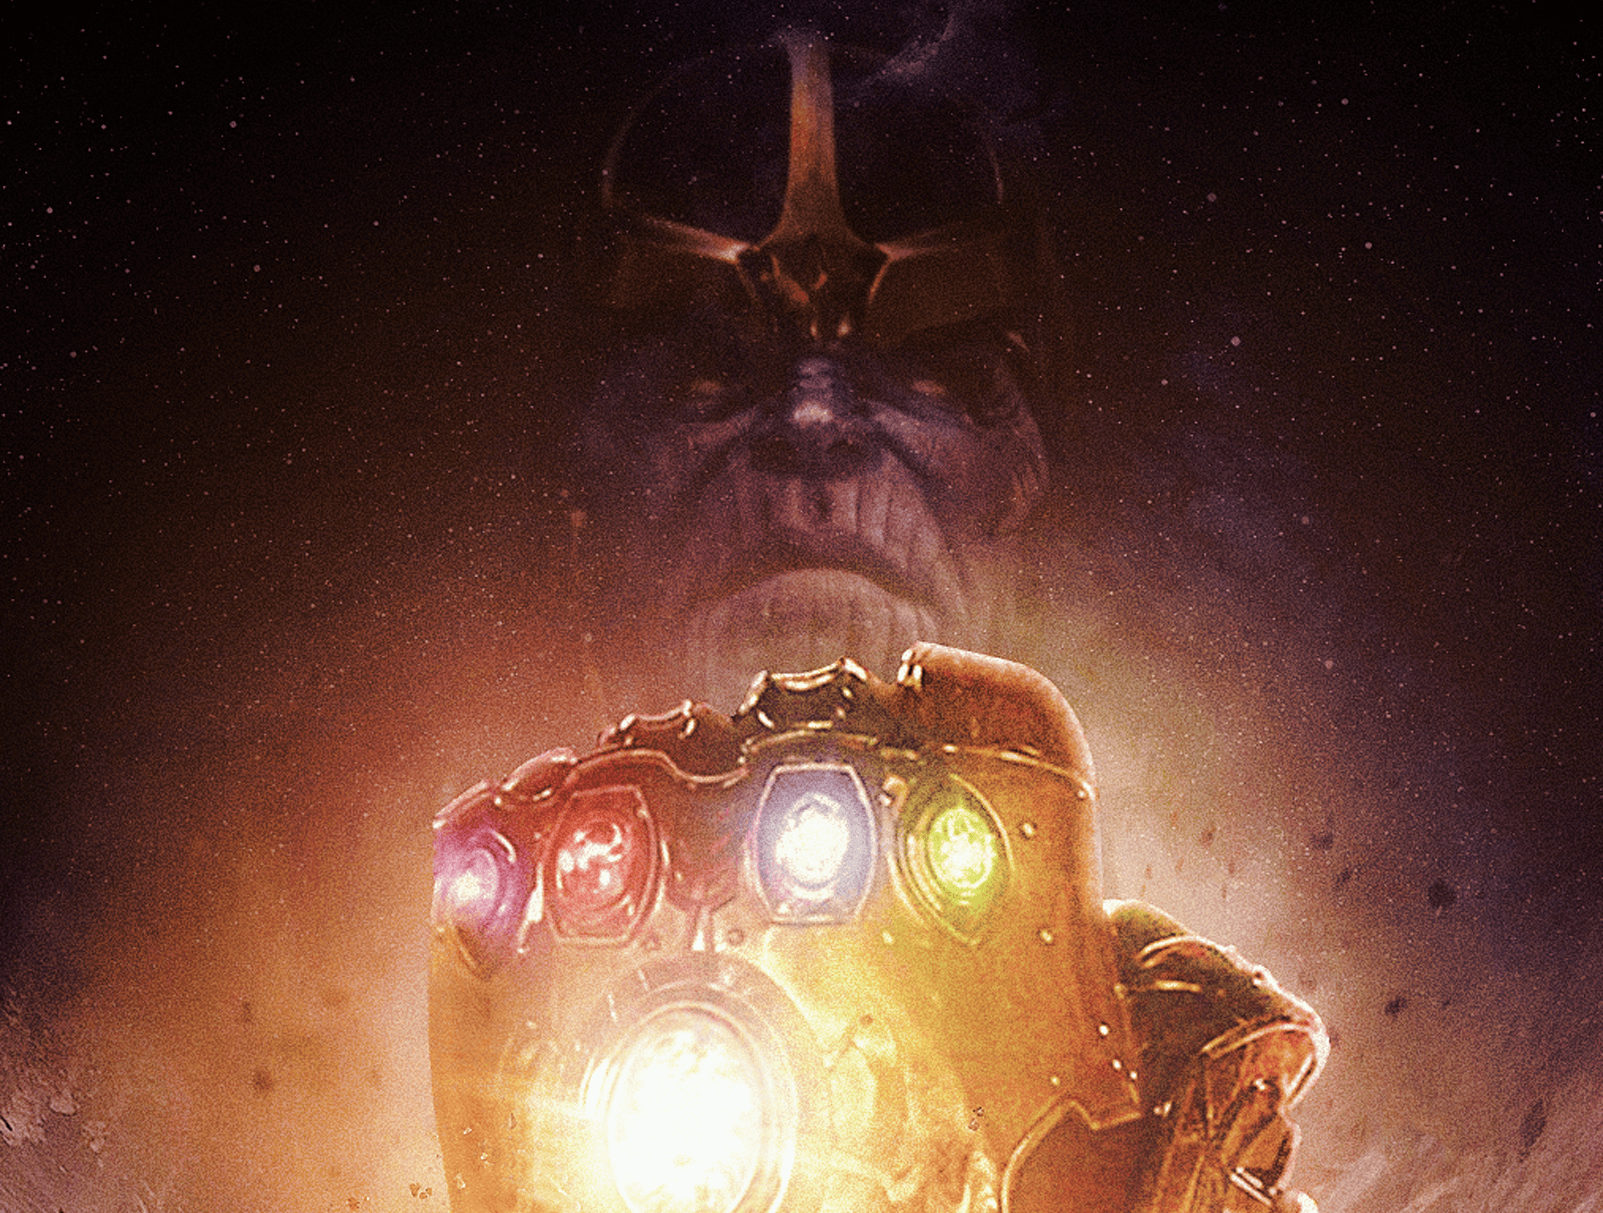 Avengers: Infinity War HD Wallpaper. Background